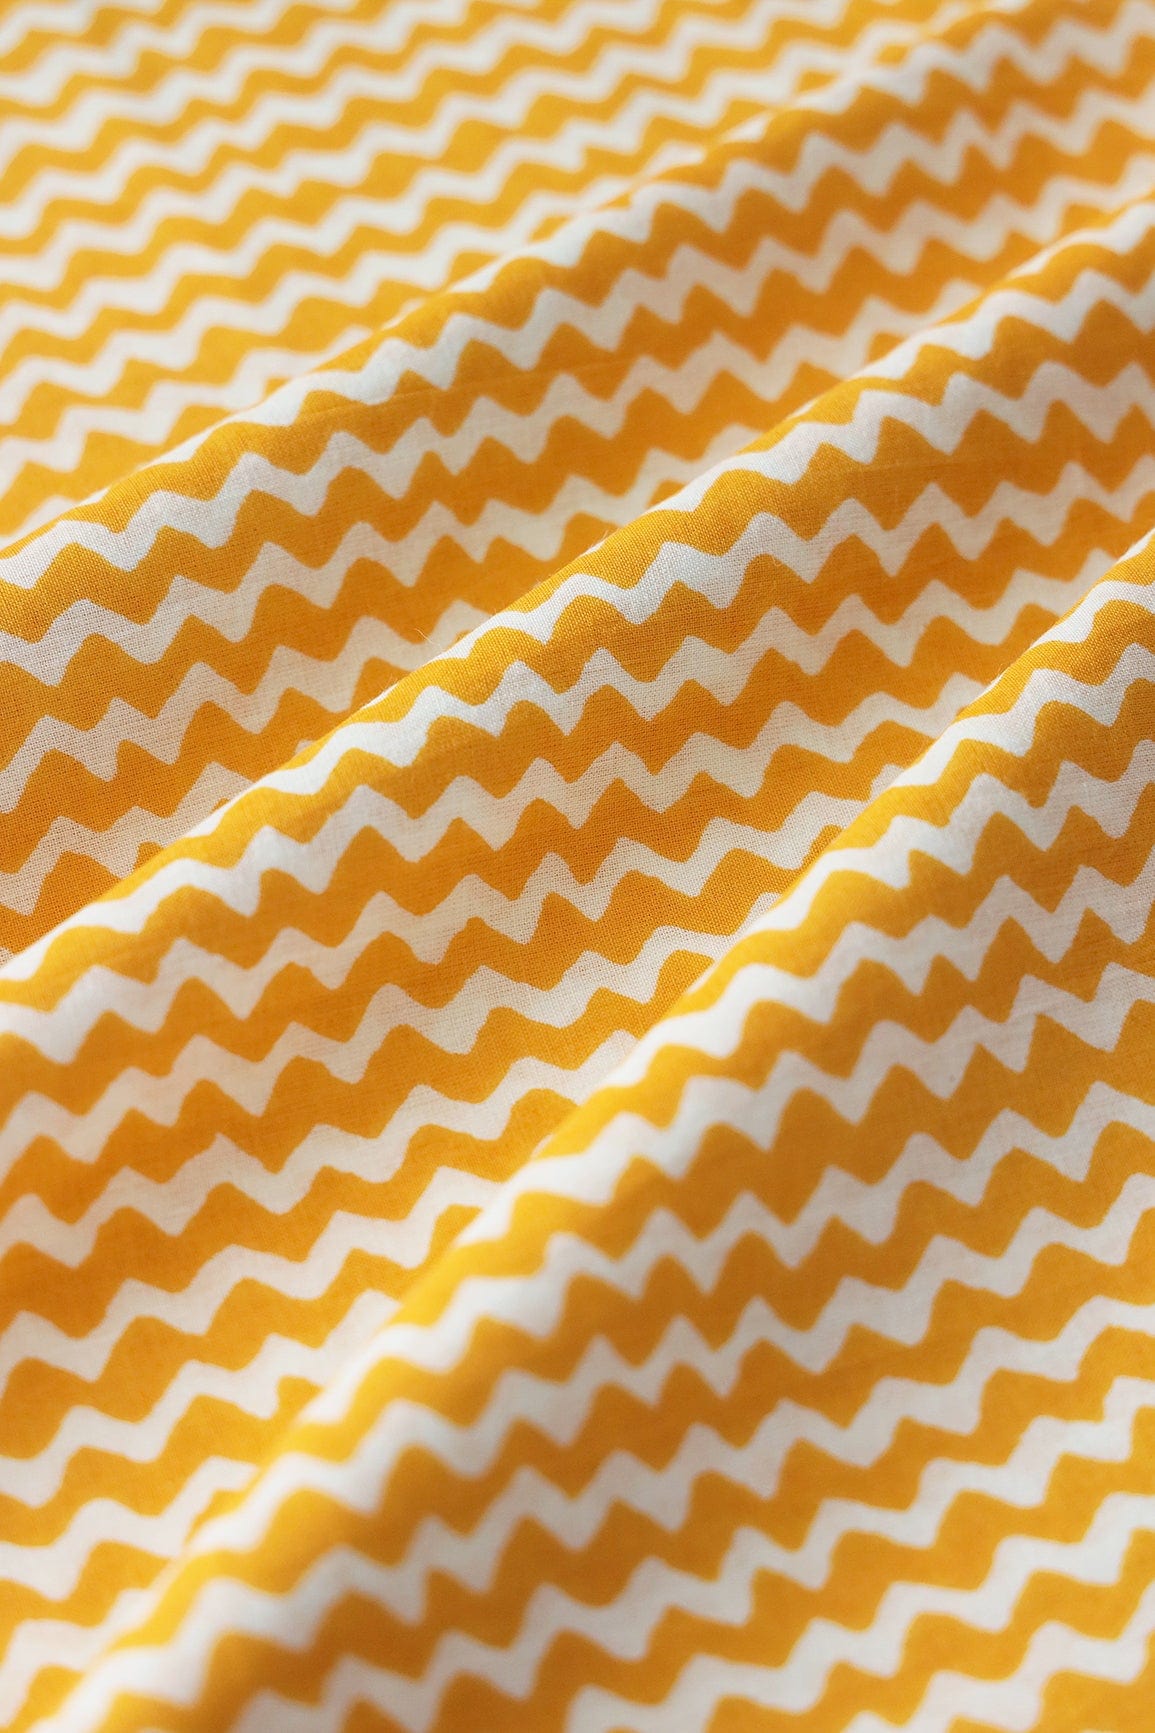 doeraa Prints Yellow And White Chevron Print On Pure Cotton Fabric